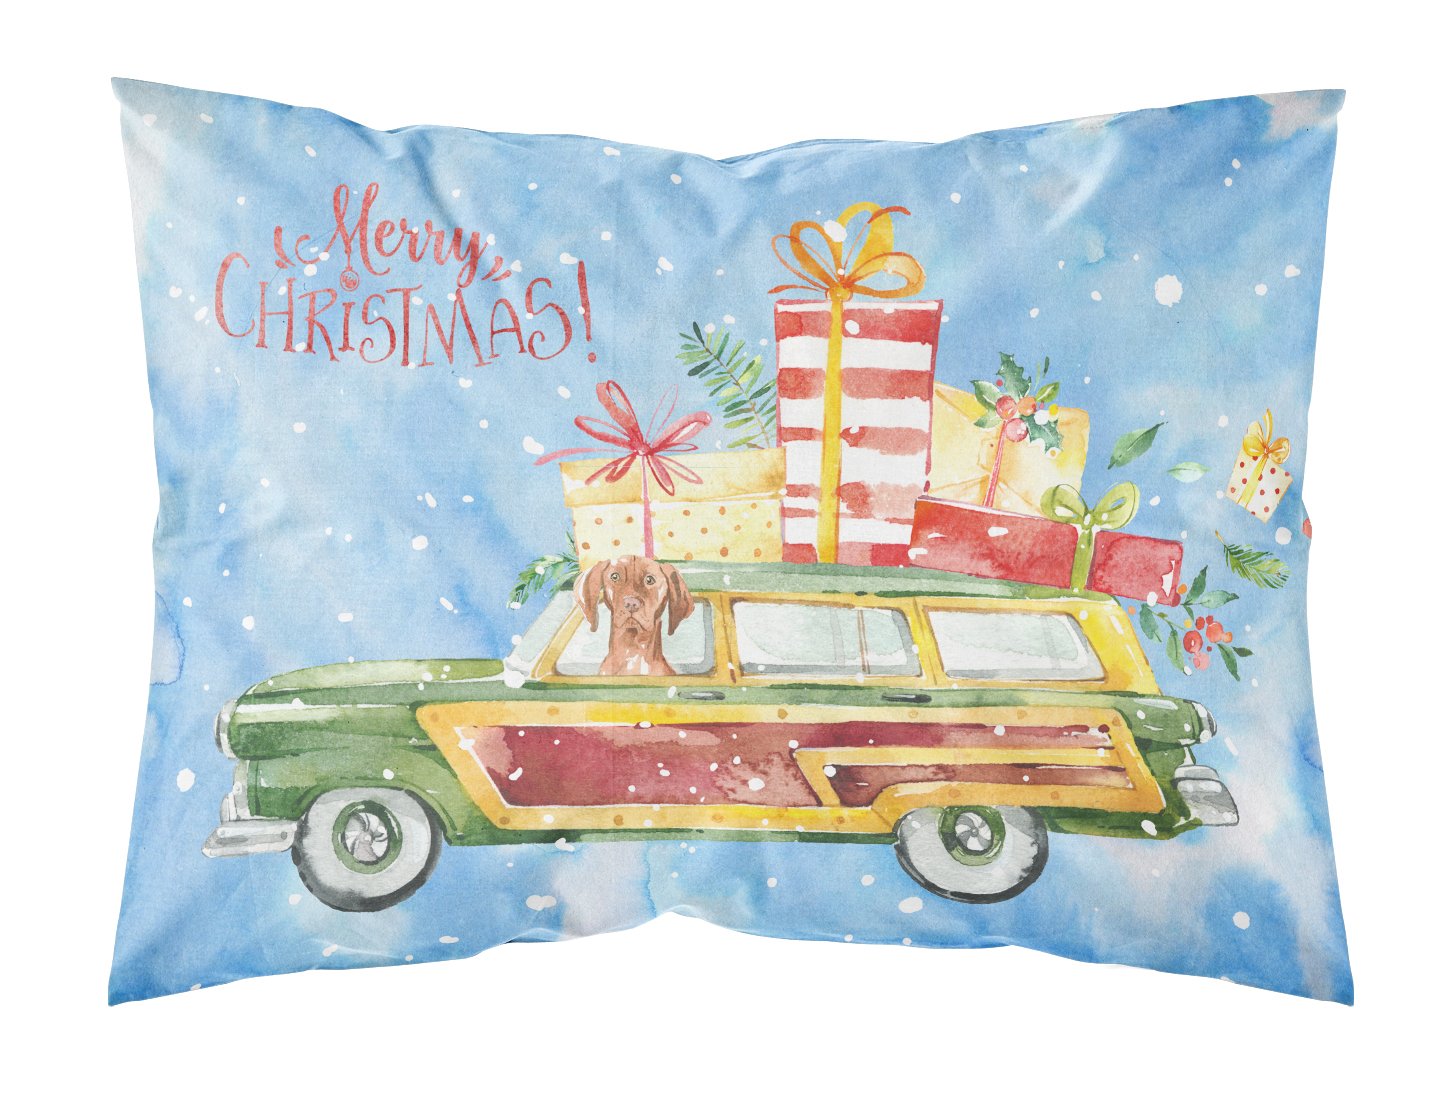 Merry Christmas Vizsla Fabric Standard Pillowcase CK2408PILLOWCASE by Caroline's Treasures